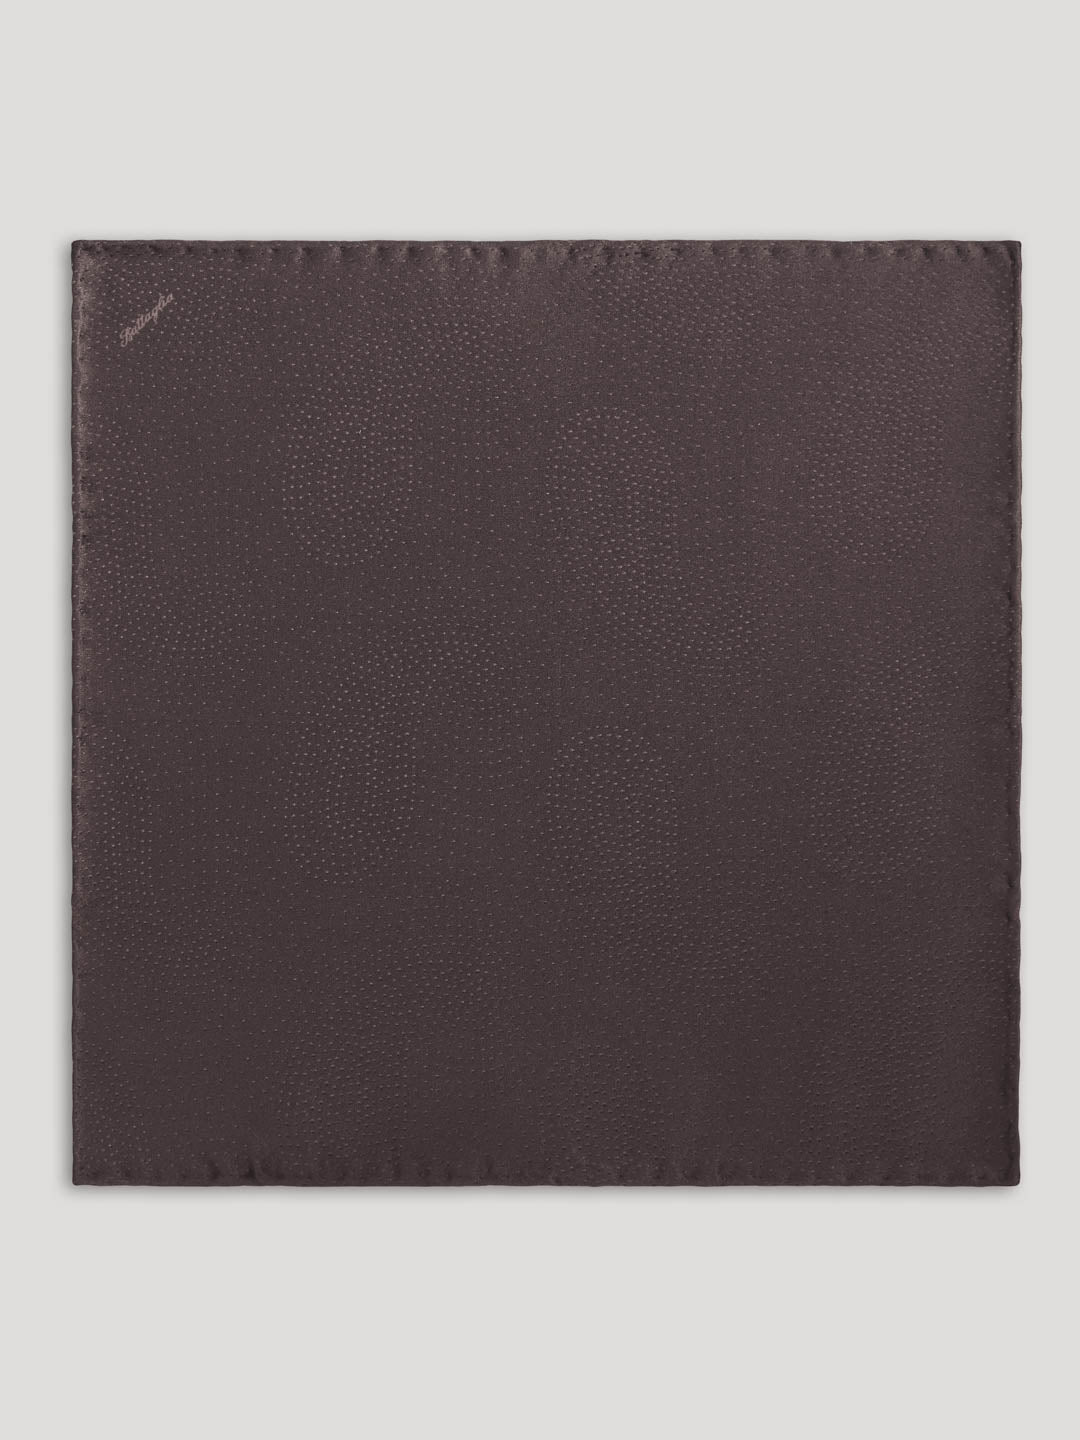 Black silk handkerchief. 